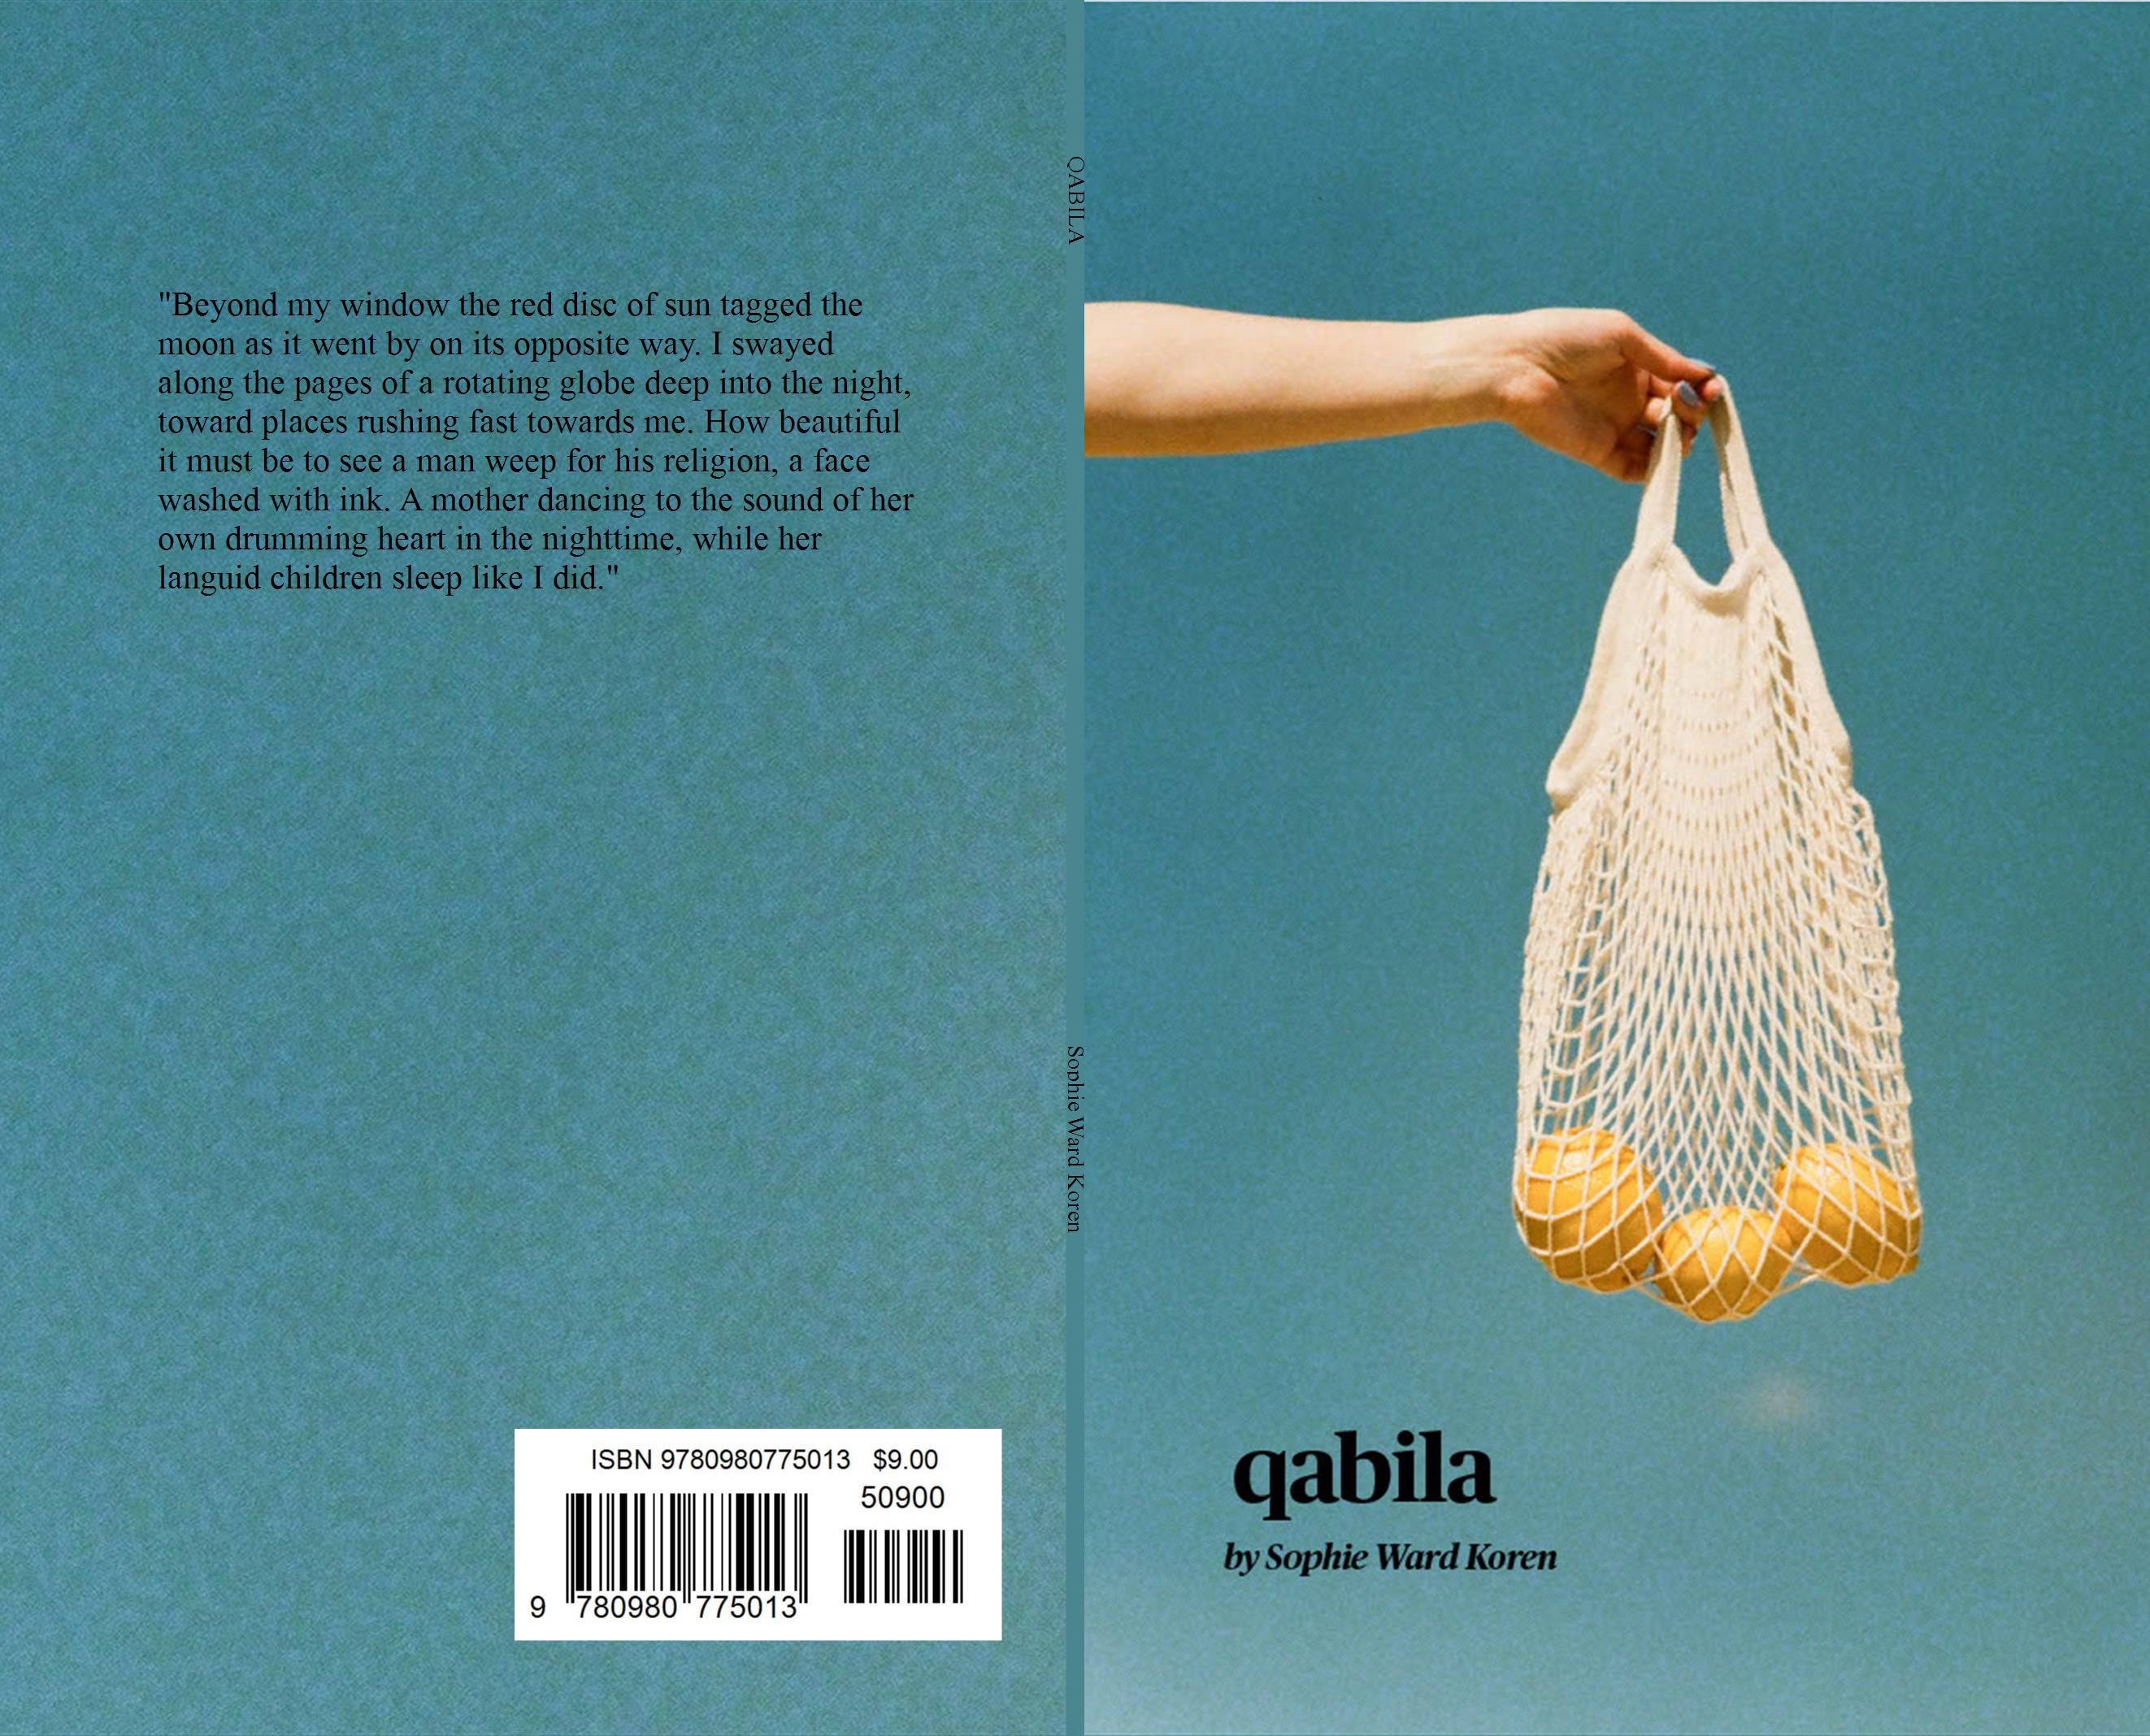 Qabila cover image